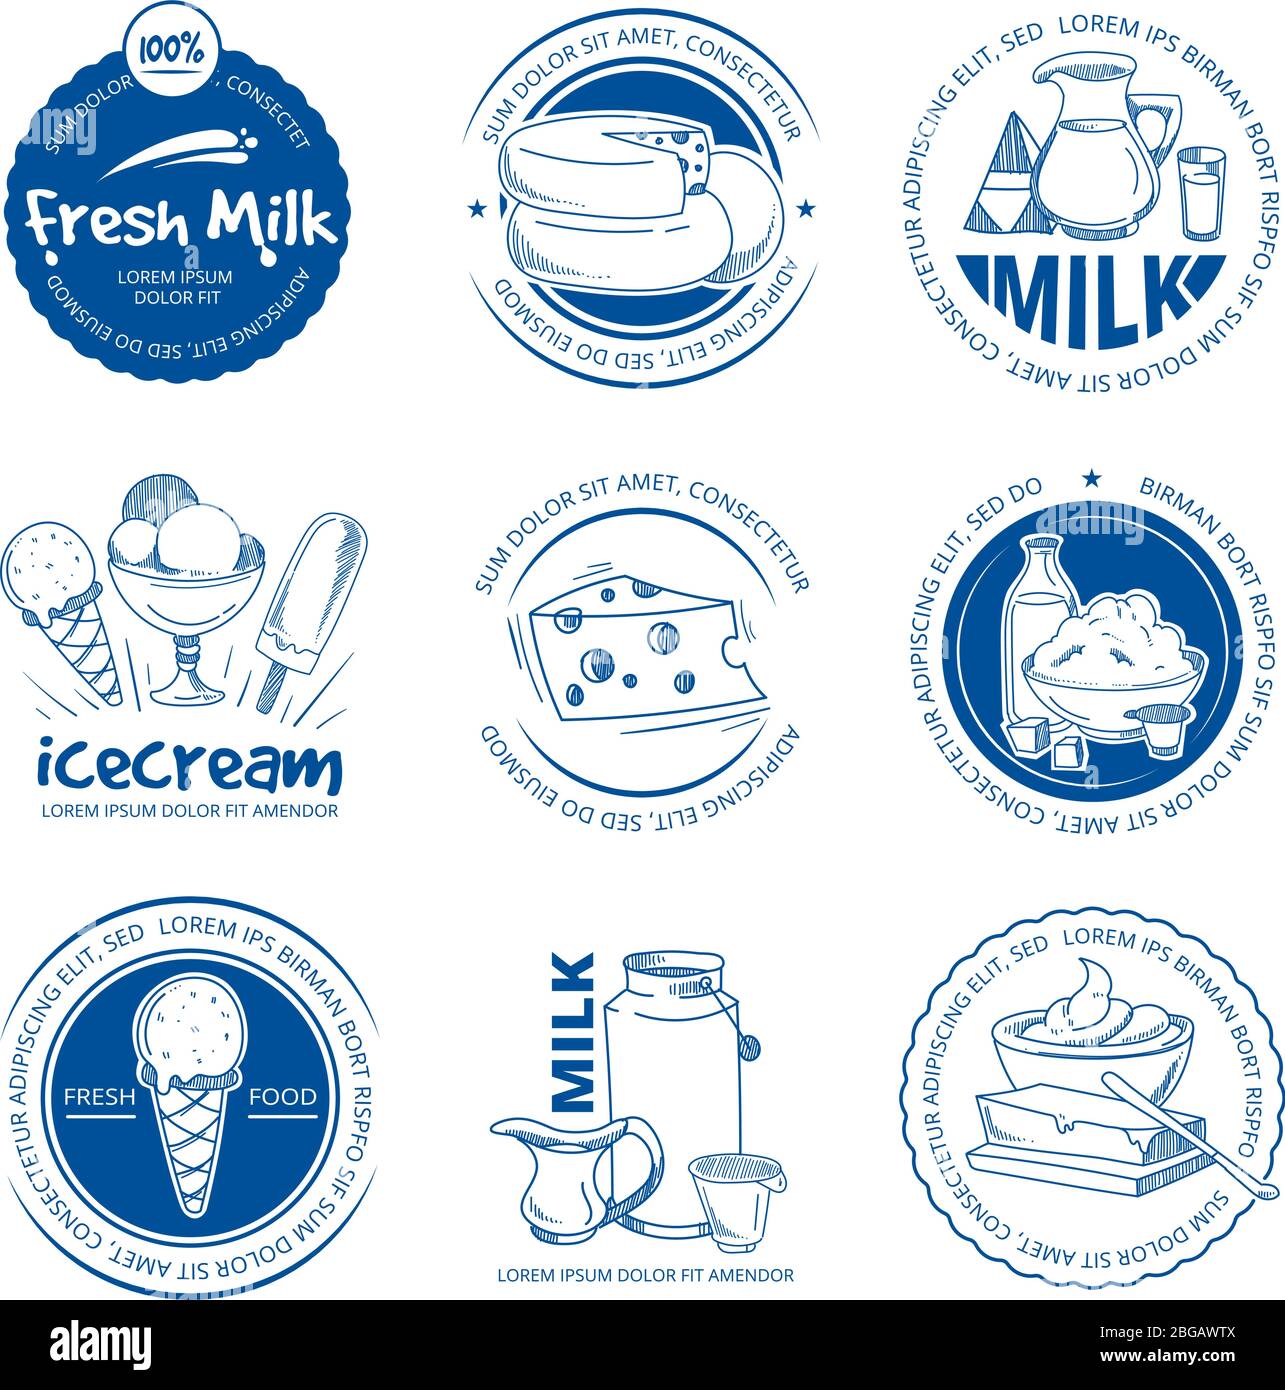 Milk Products Logos